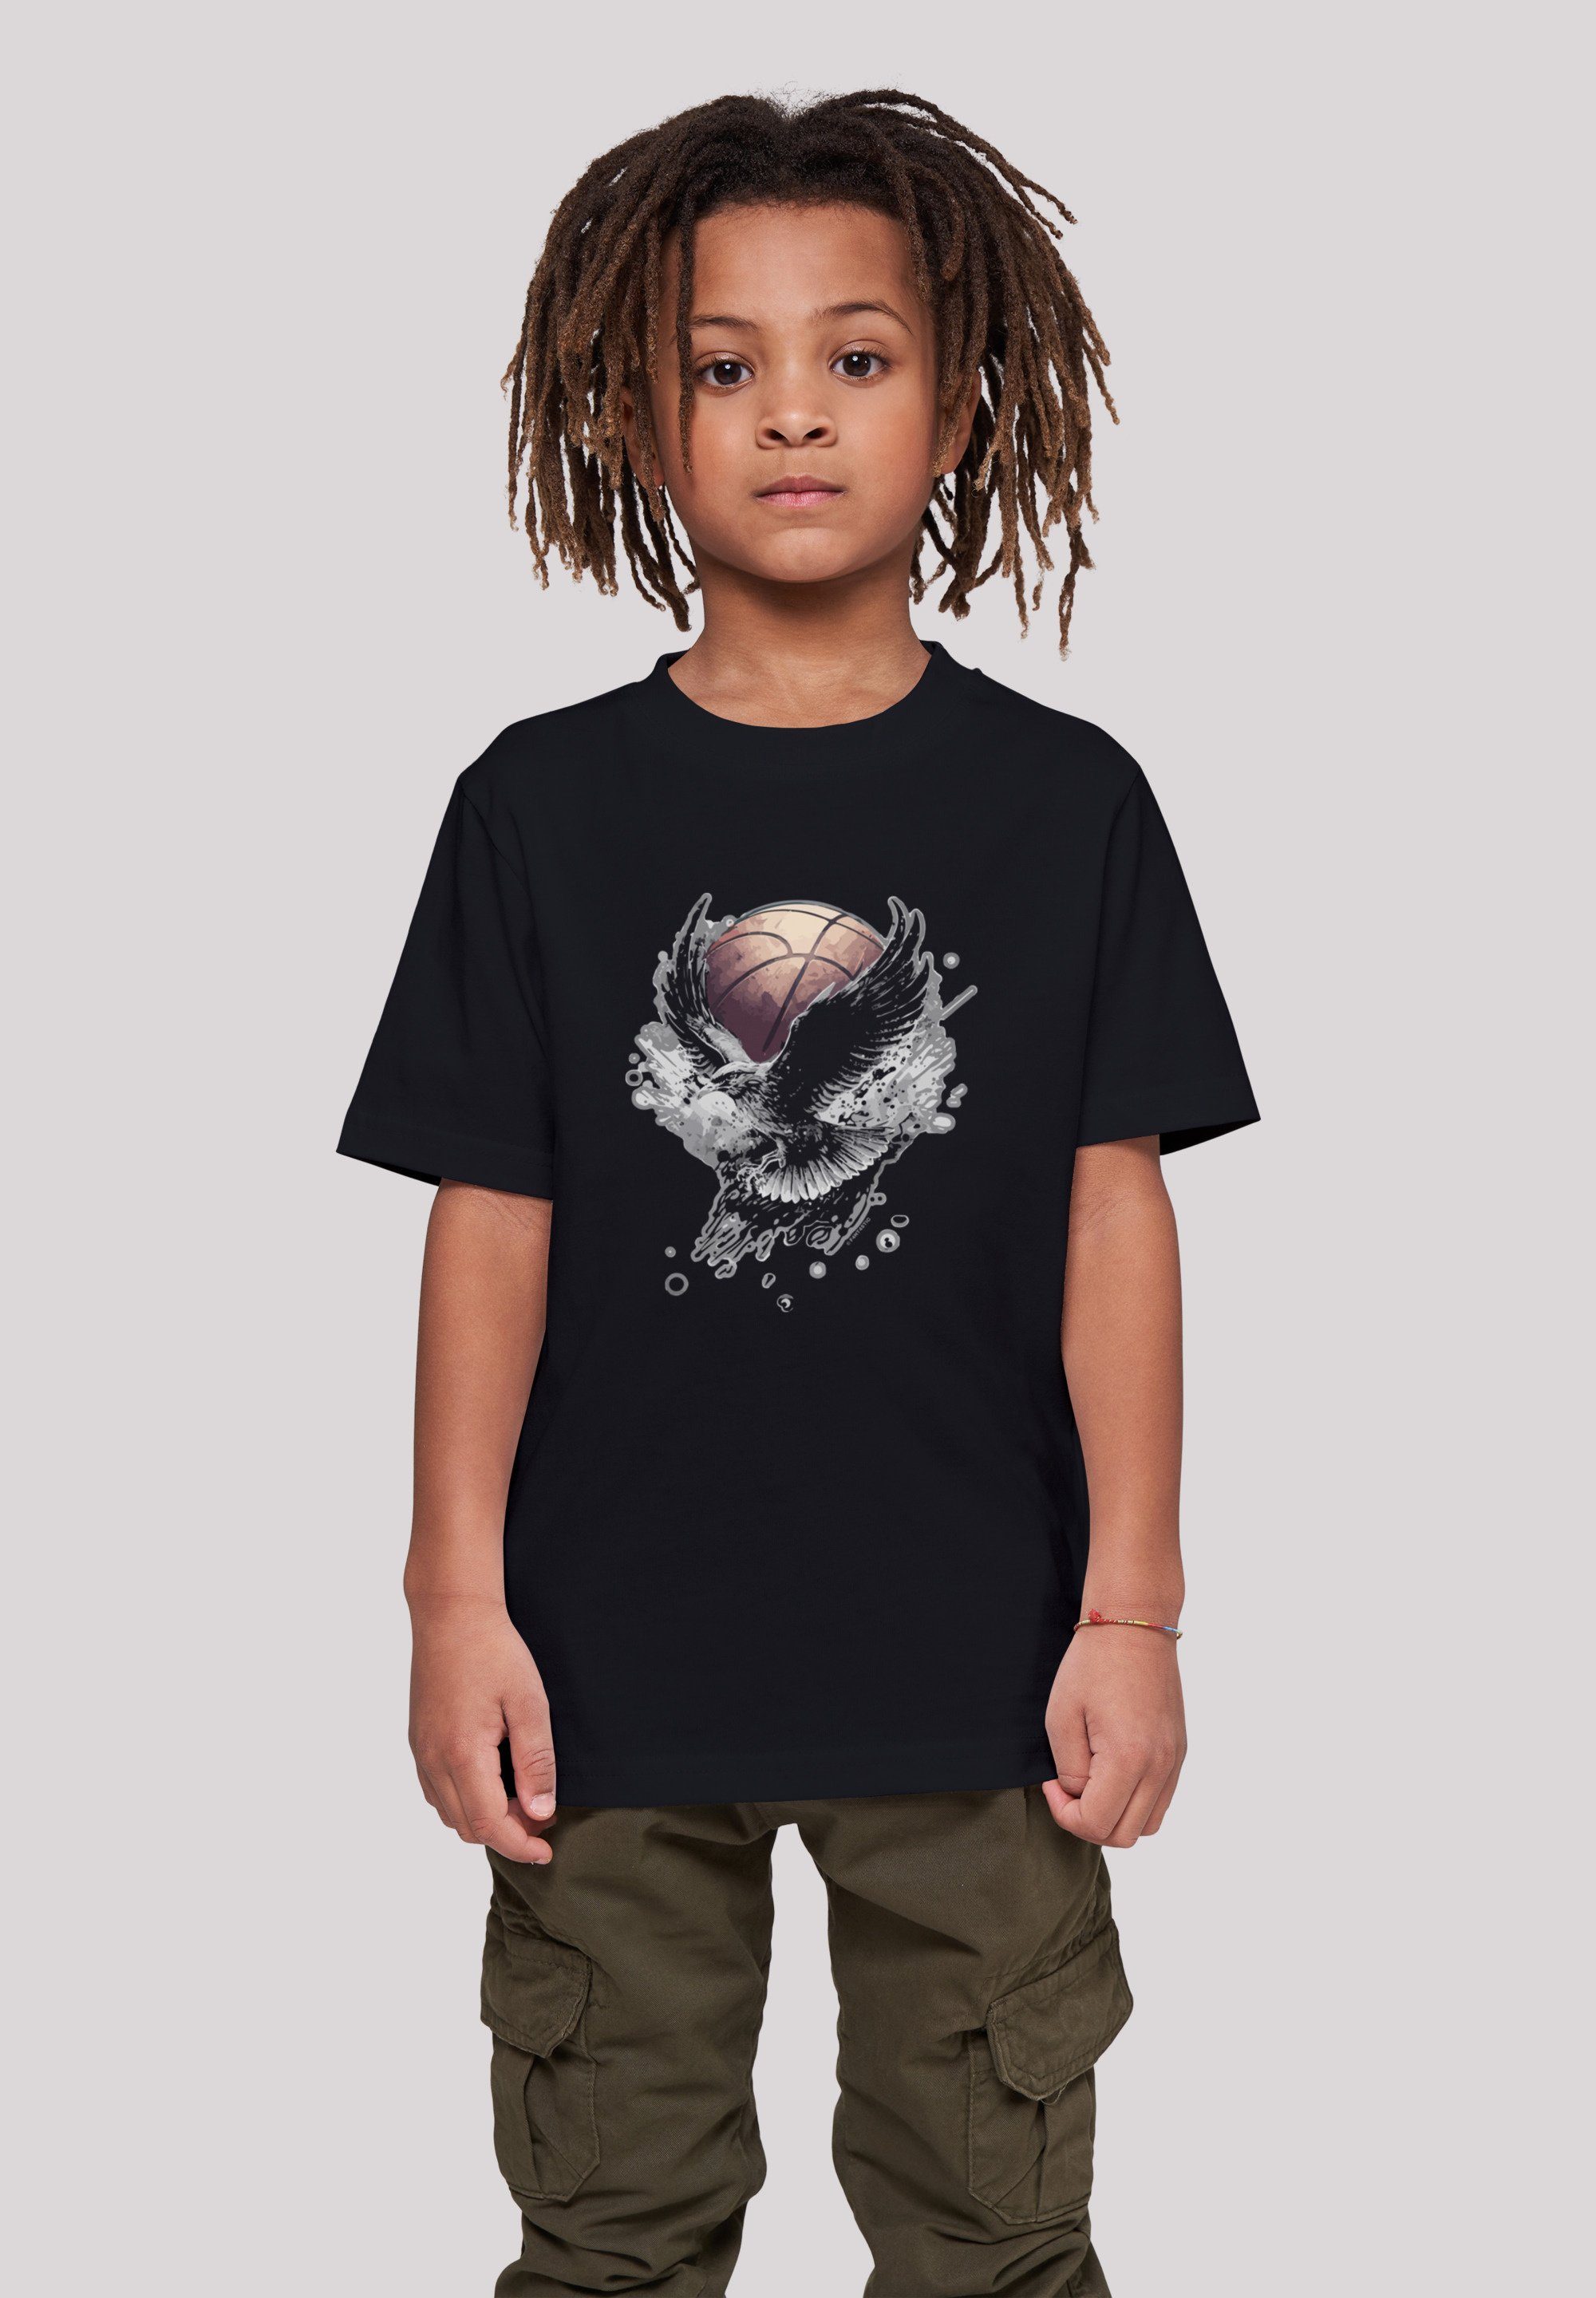 F4NT4STIC T-Shirt Basketball Adler Print schwarz